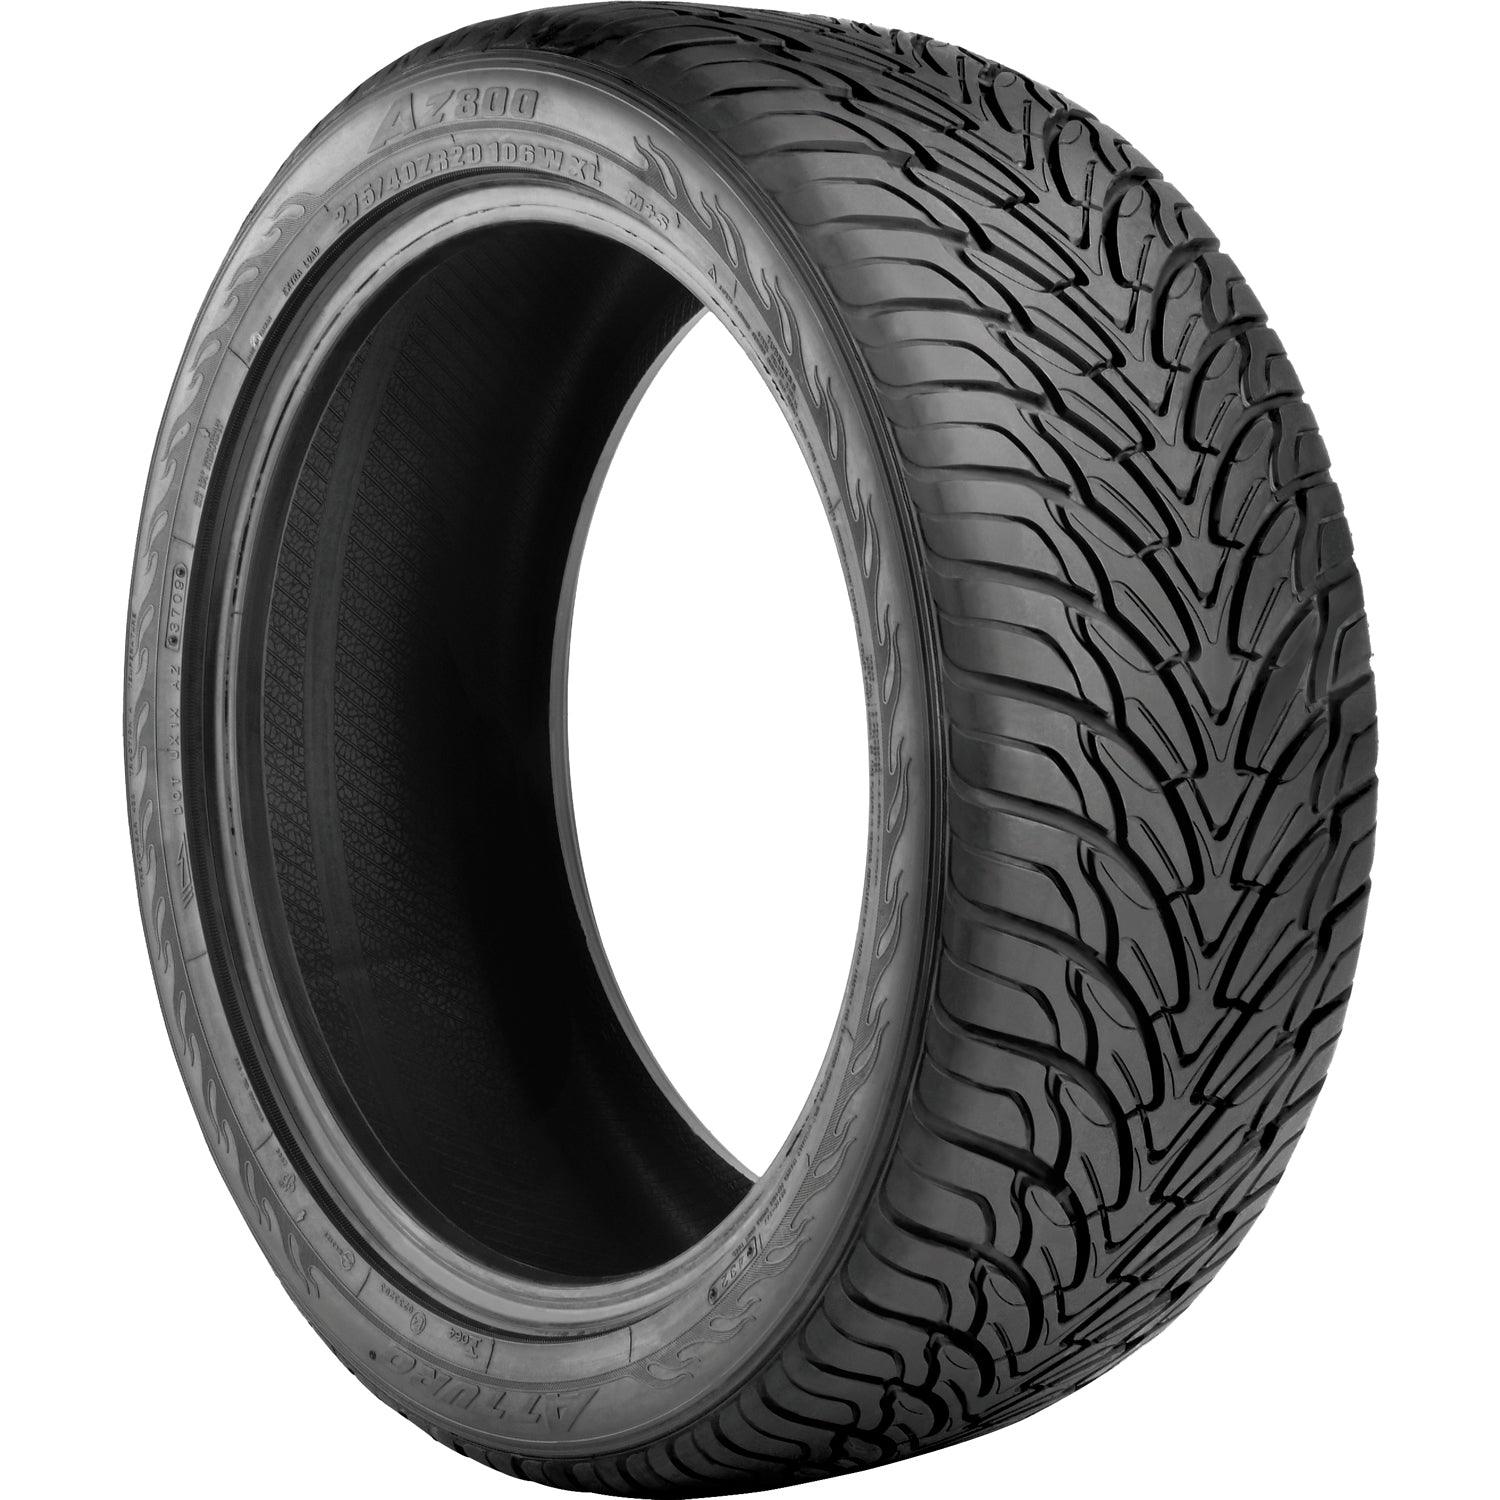 ATTURO AZ800 235/55R18 (28.2X9.8R 18) Tires